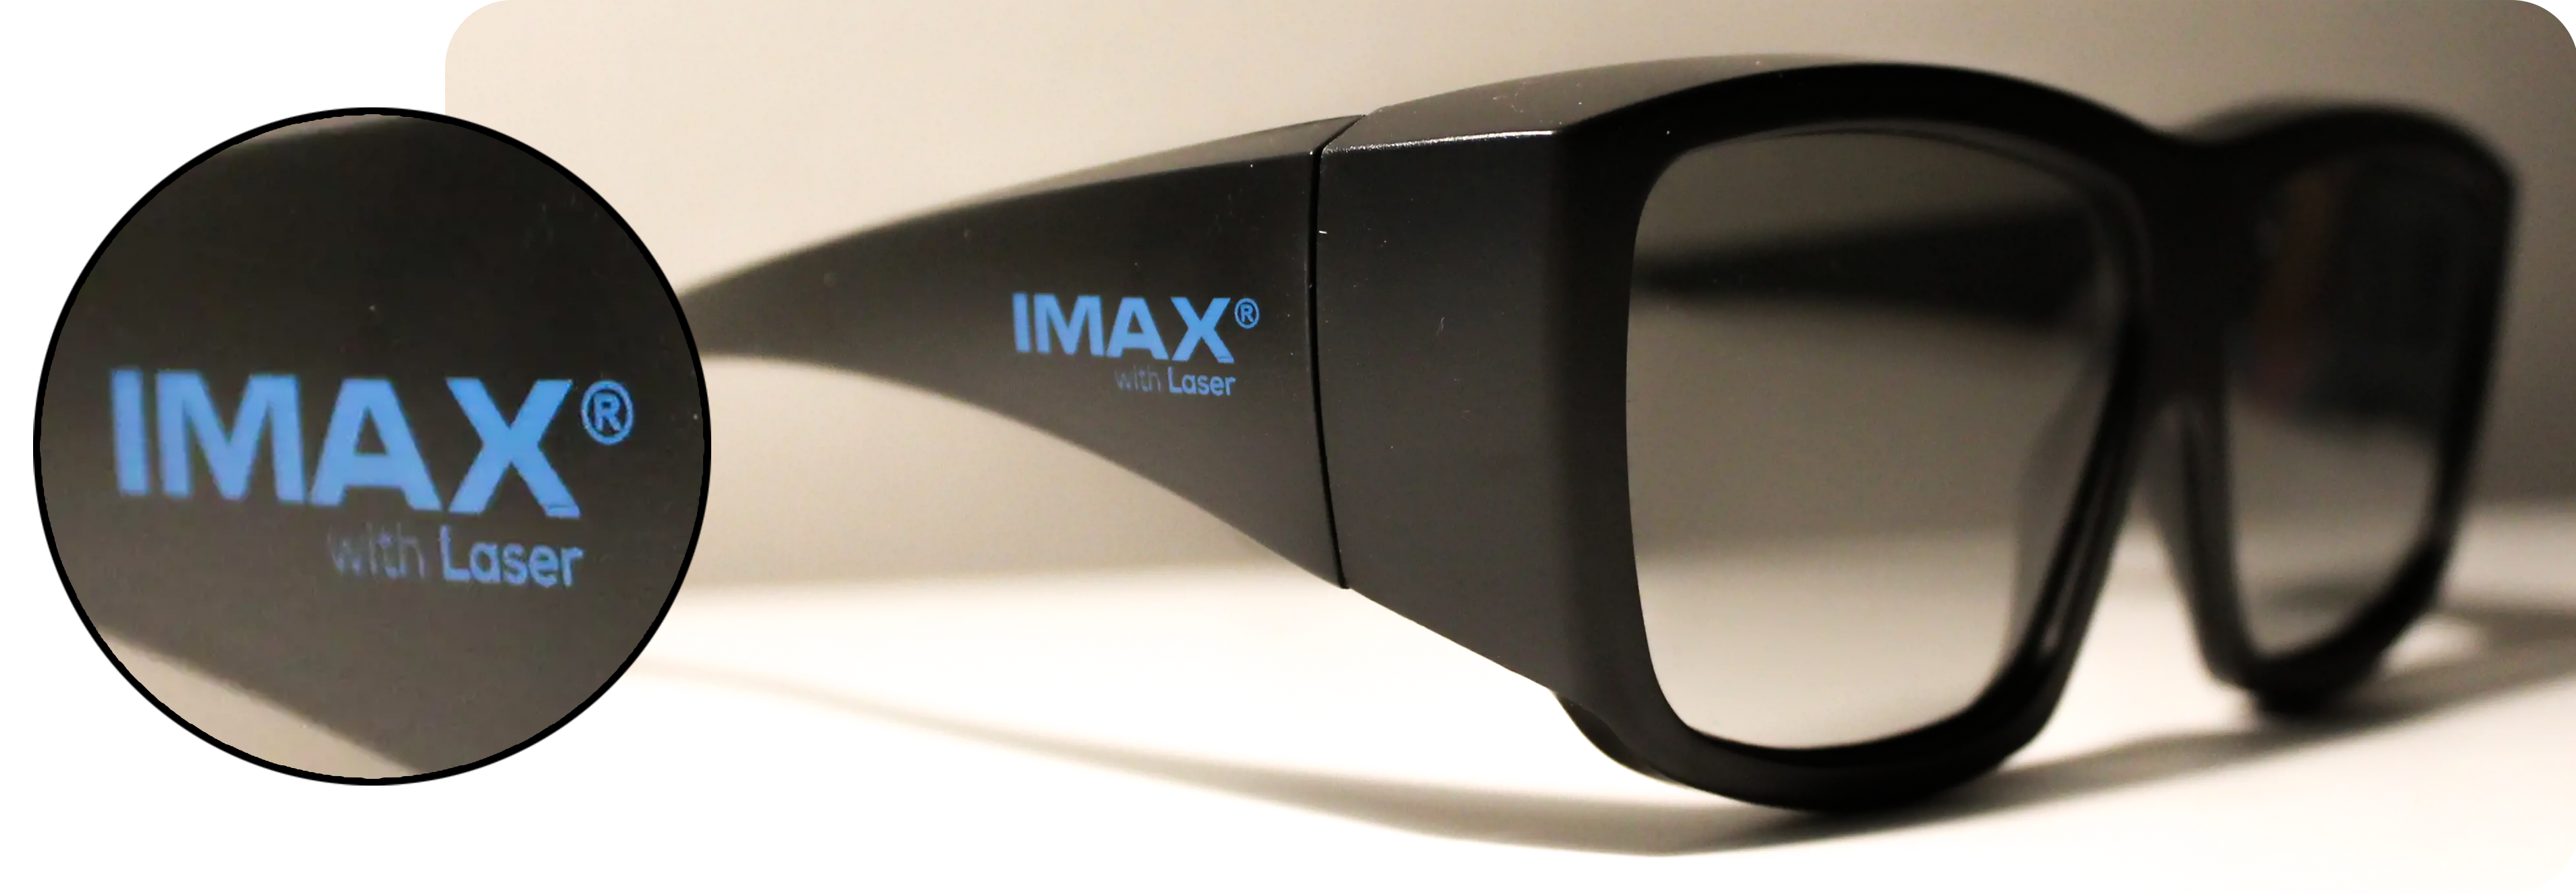 IMAX-laser